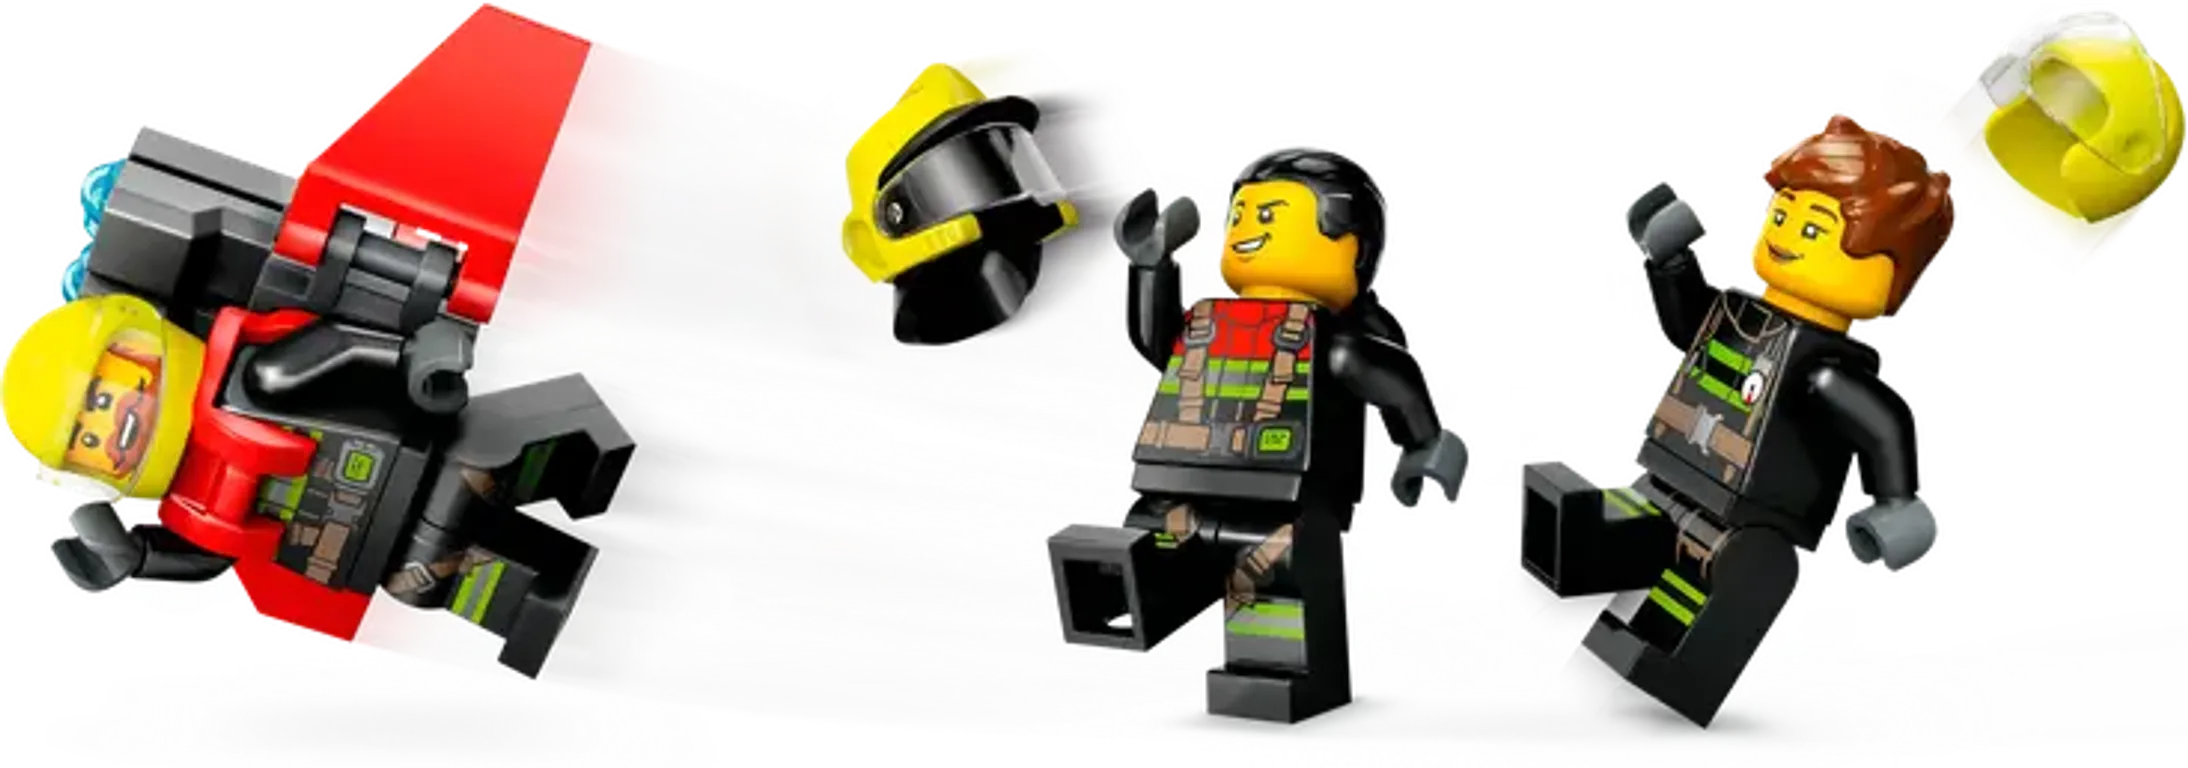 LEGO® City Fire Rescue Plane minifigures